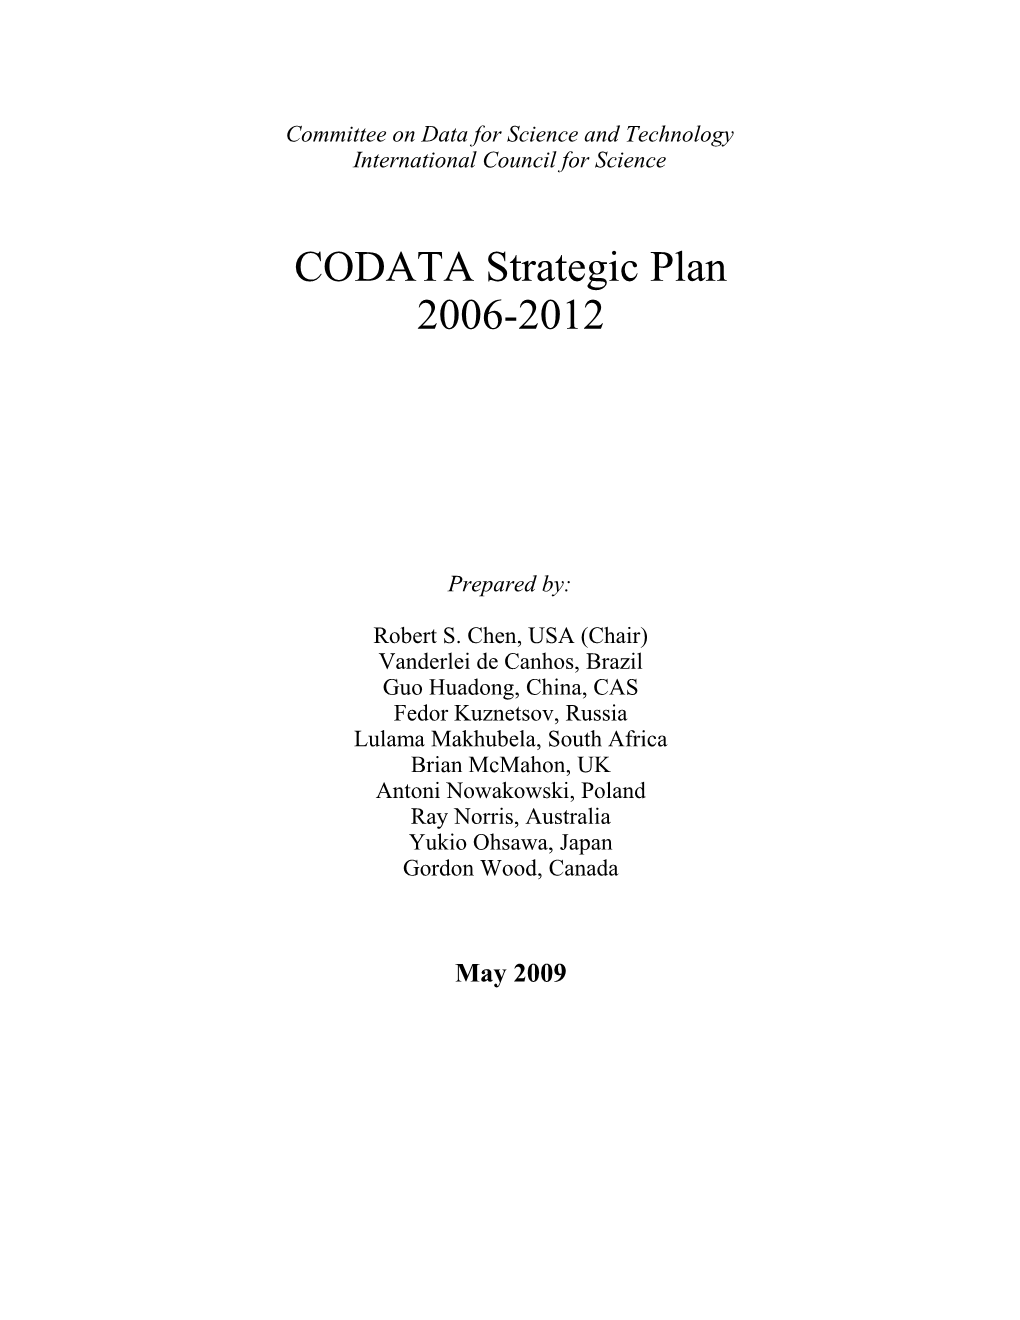 CODATA Strategic Plan